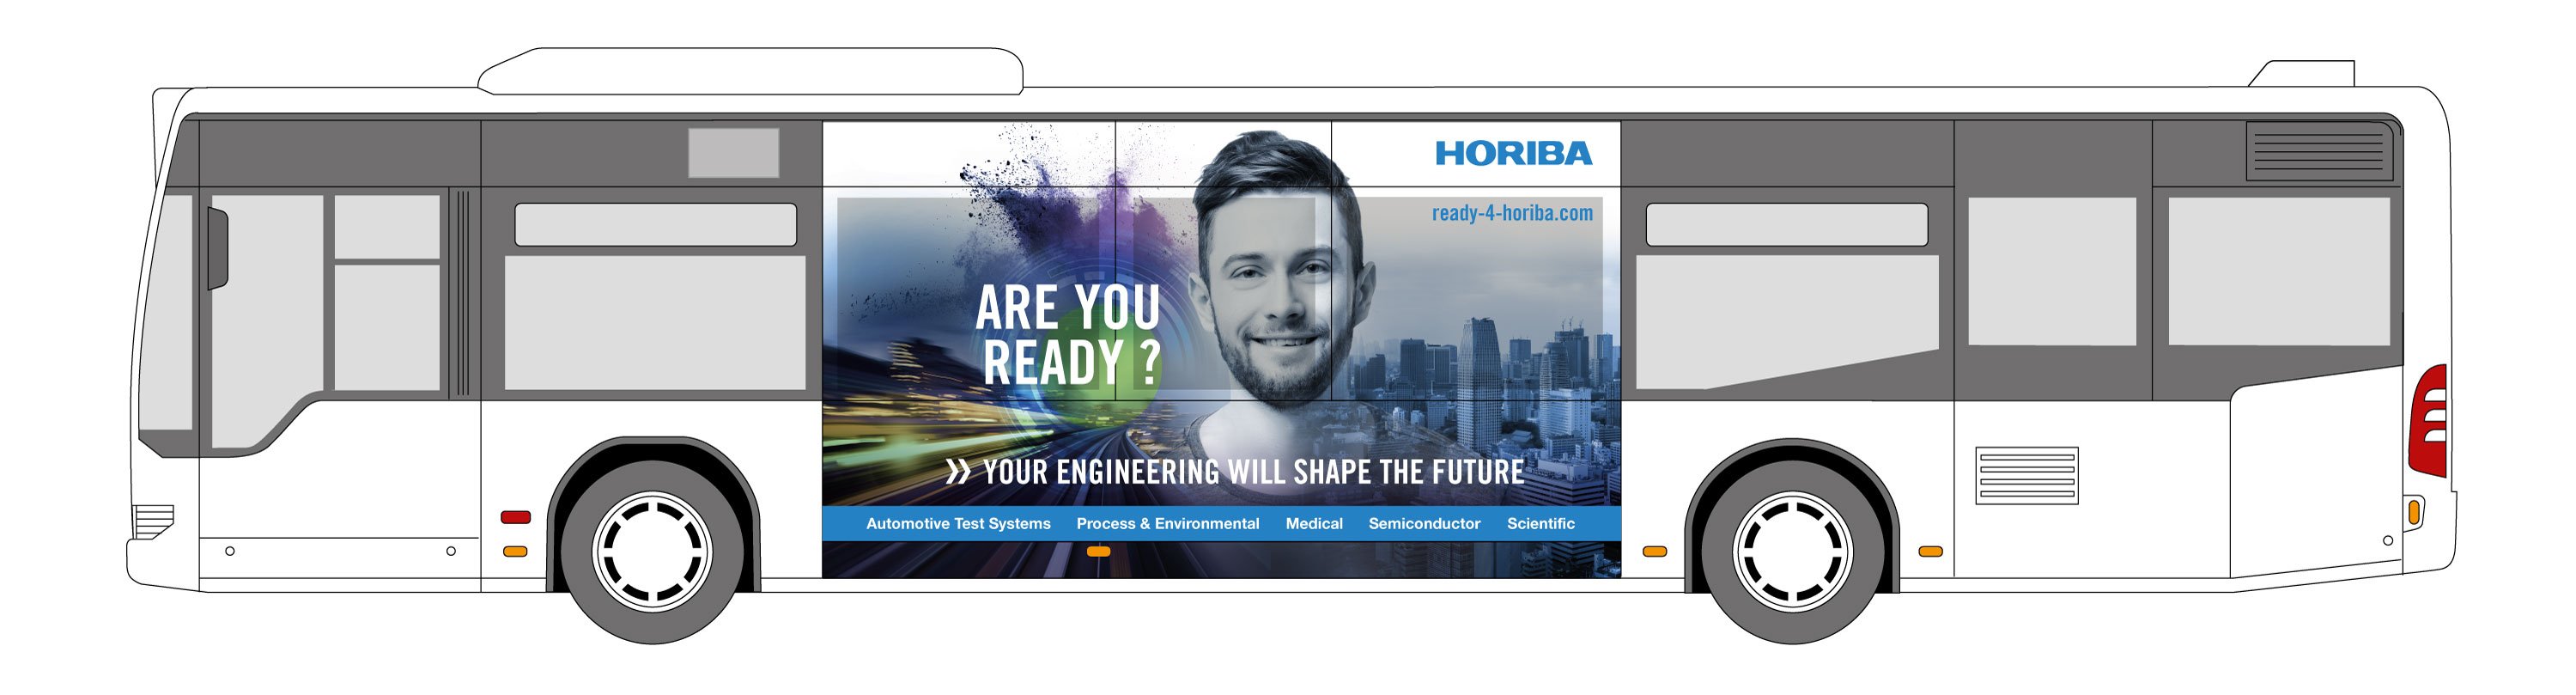 Recruiting campaign, transportation advertising for HORIBA: DIE NEUDENKER® Agency, Darmstadt